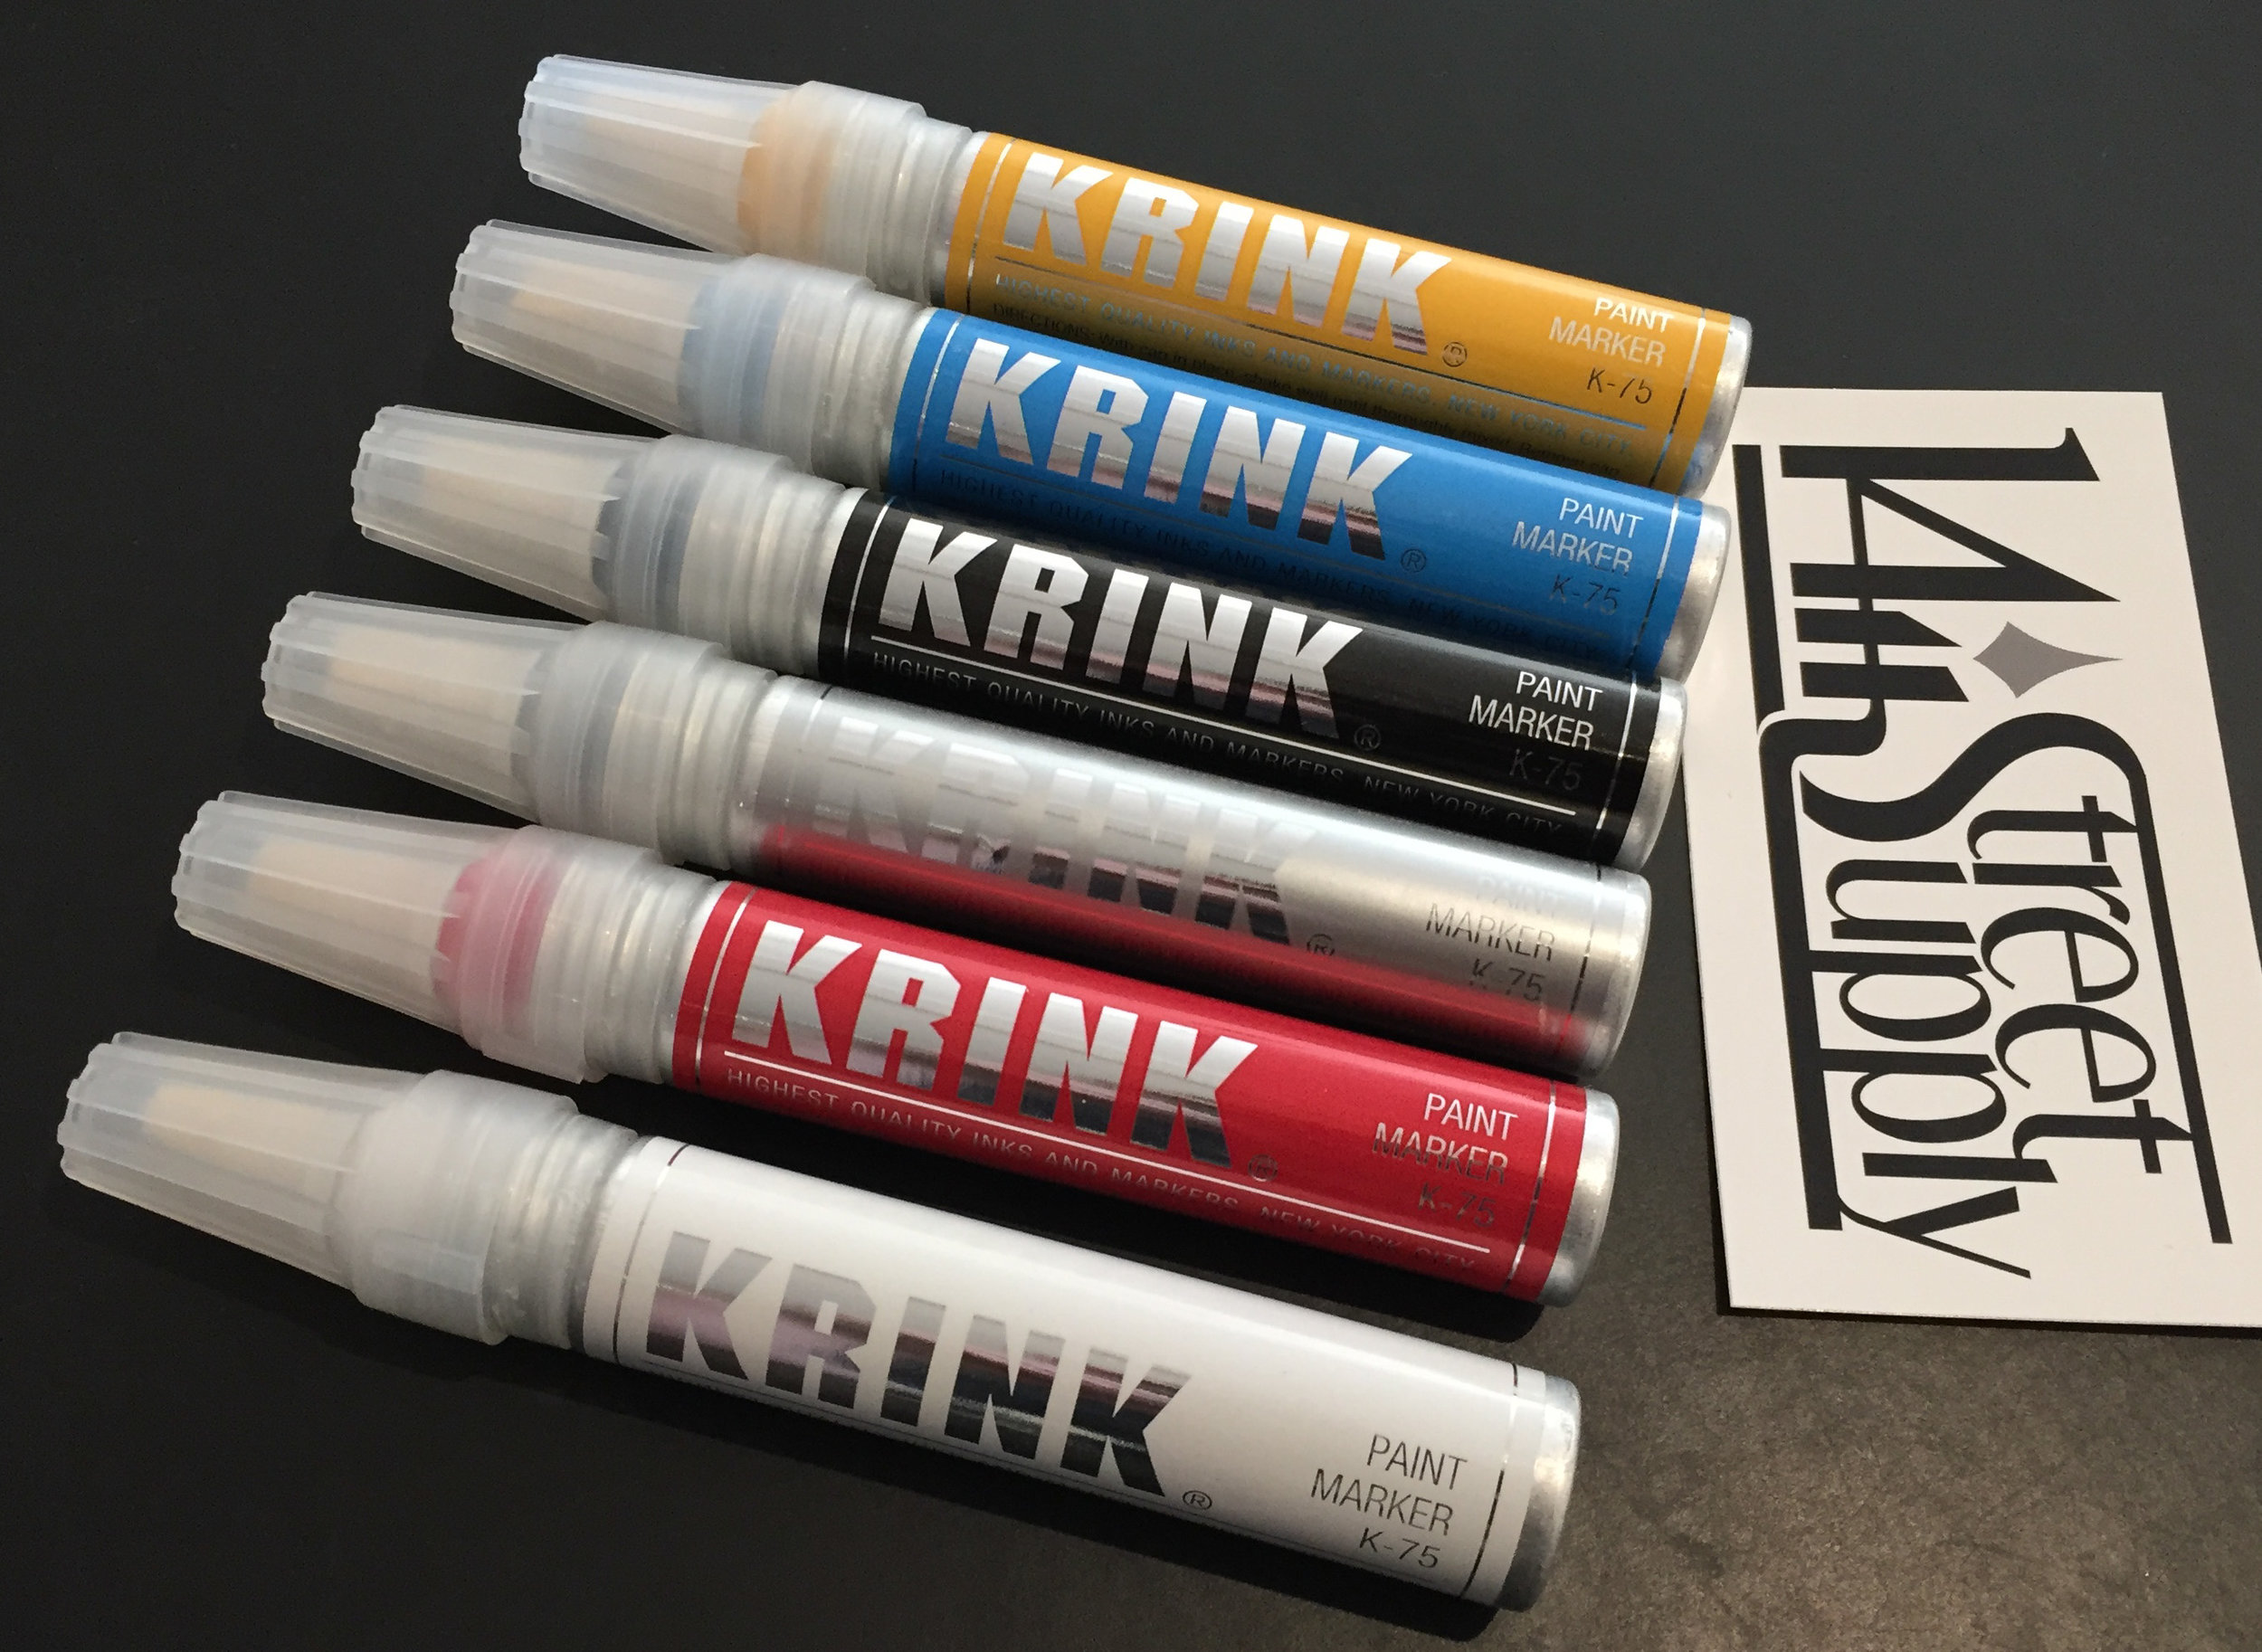 Krink K-75 Alcohol Paint Markers Set of 6, 7mm Chisel Tip